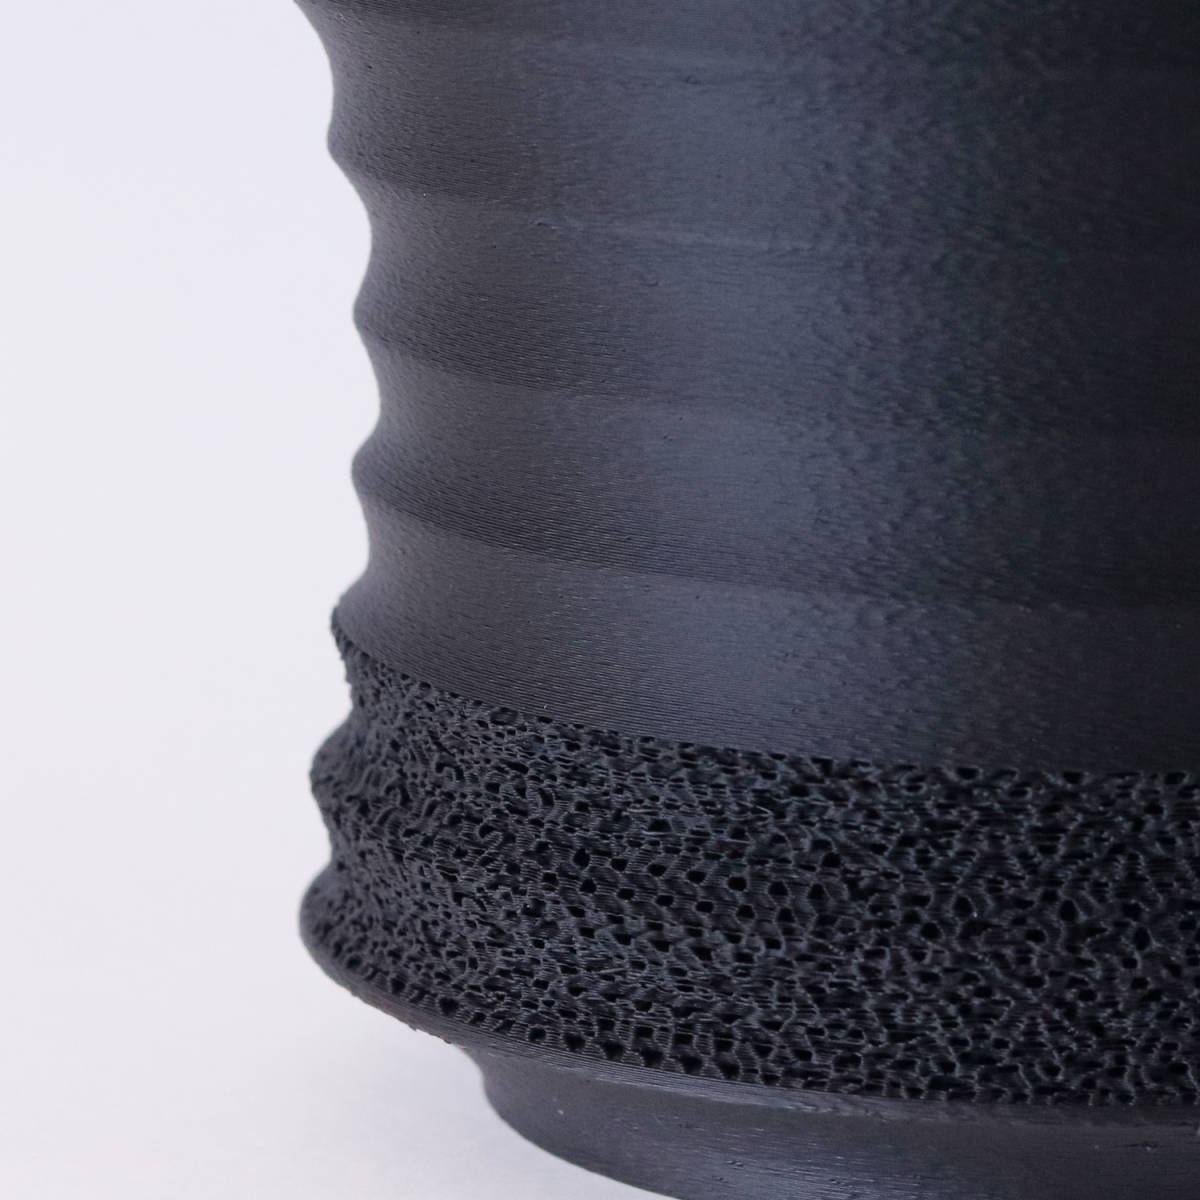 Adv-037 (130×110) Ripple Pot 植木鉢 おしゃれ 水捌け シンプル 黒 プラ鉢 多肉植物 塊根植物 観葉植物 マットブラック 3d鉢 排水 通気性_画像6